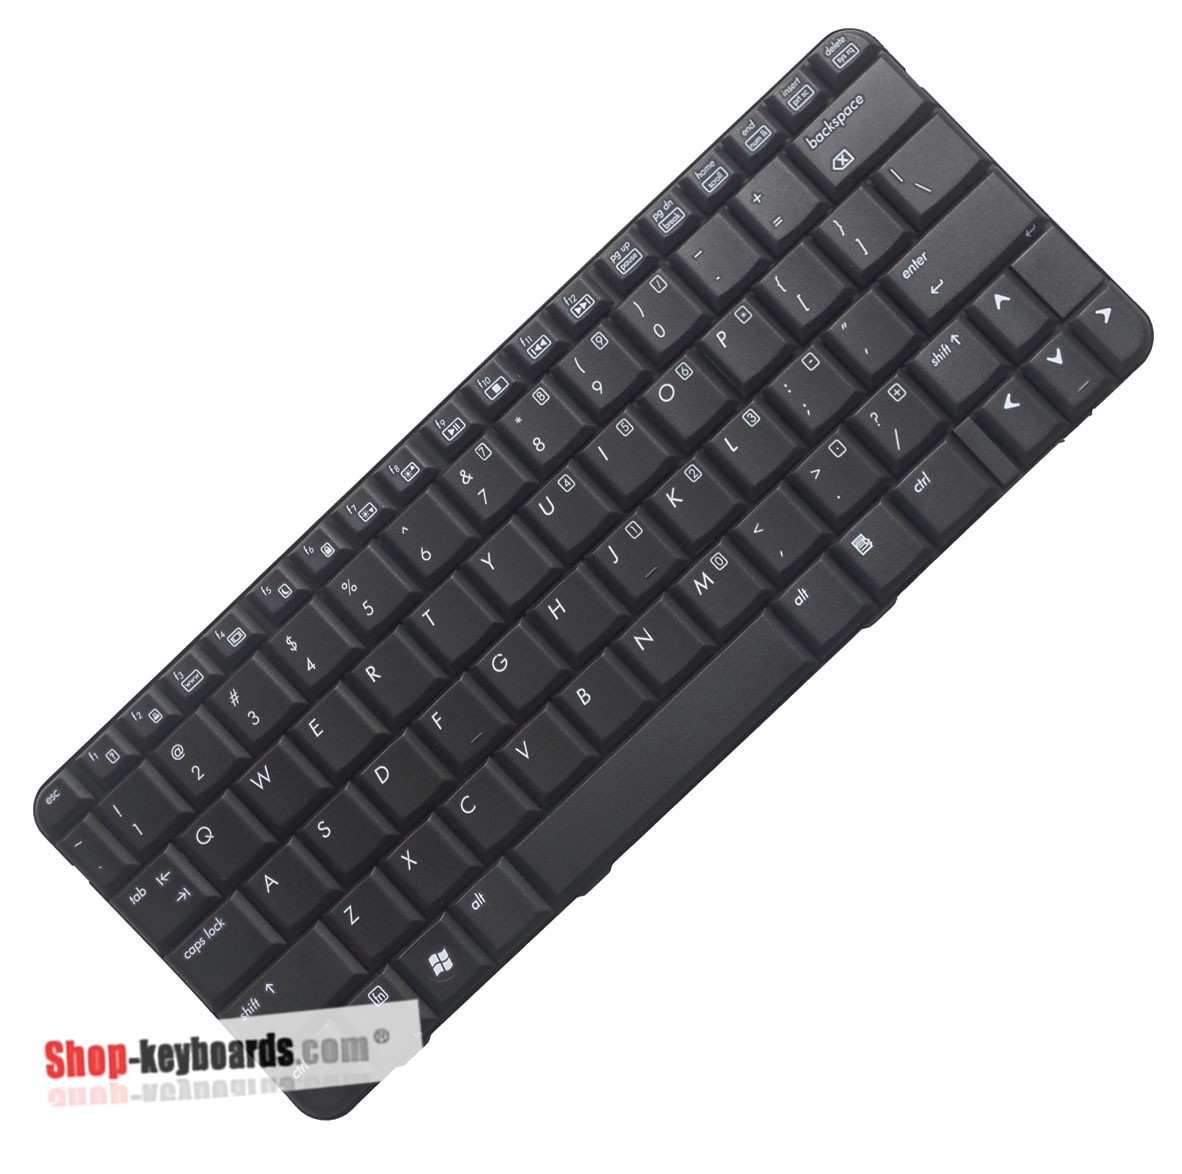 Compaq Presario CQ20-200 Keyboard replacement